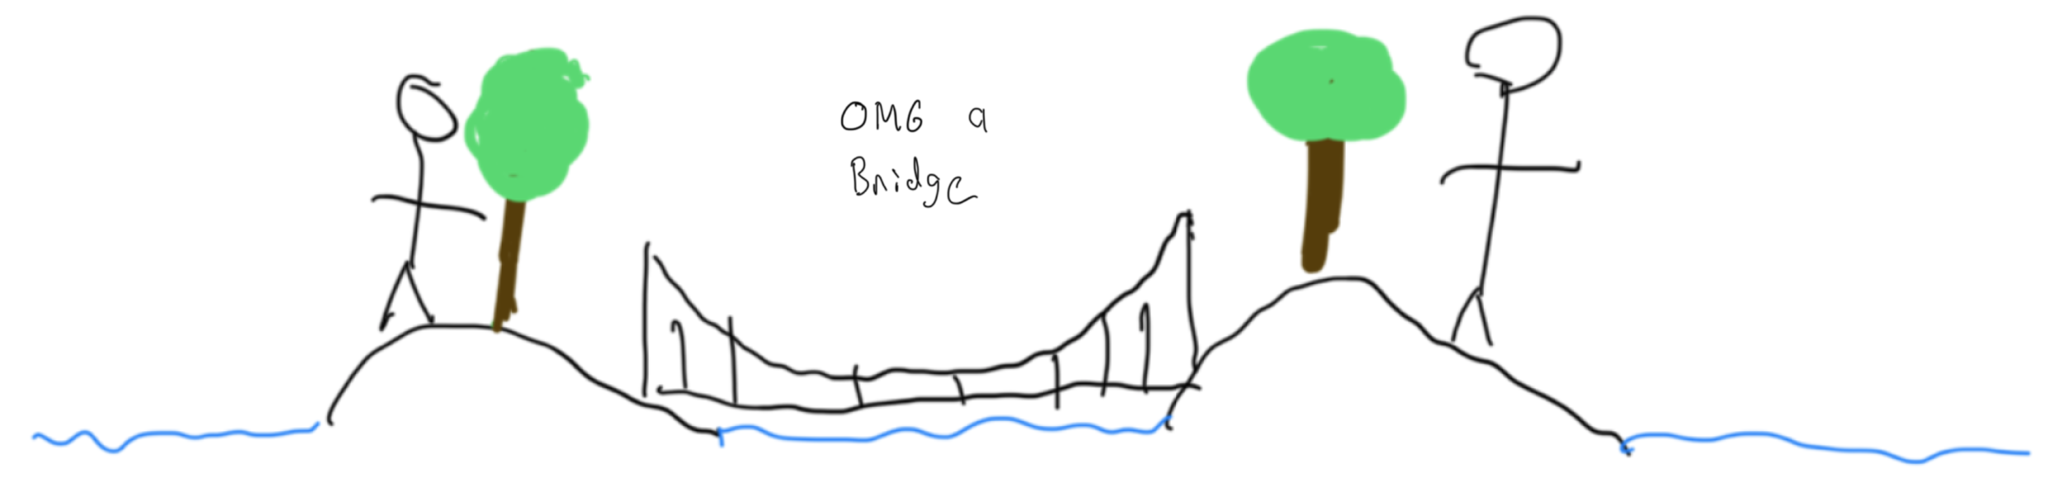 a bridge appears